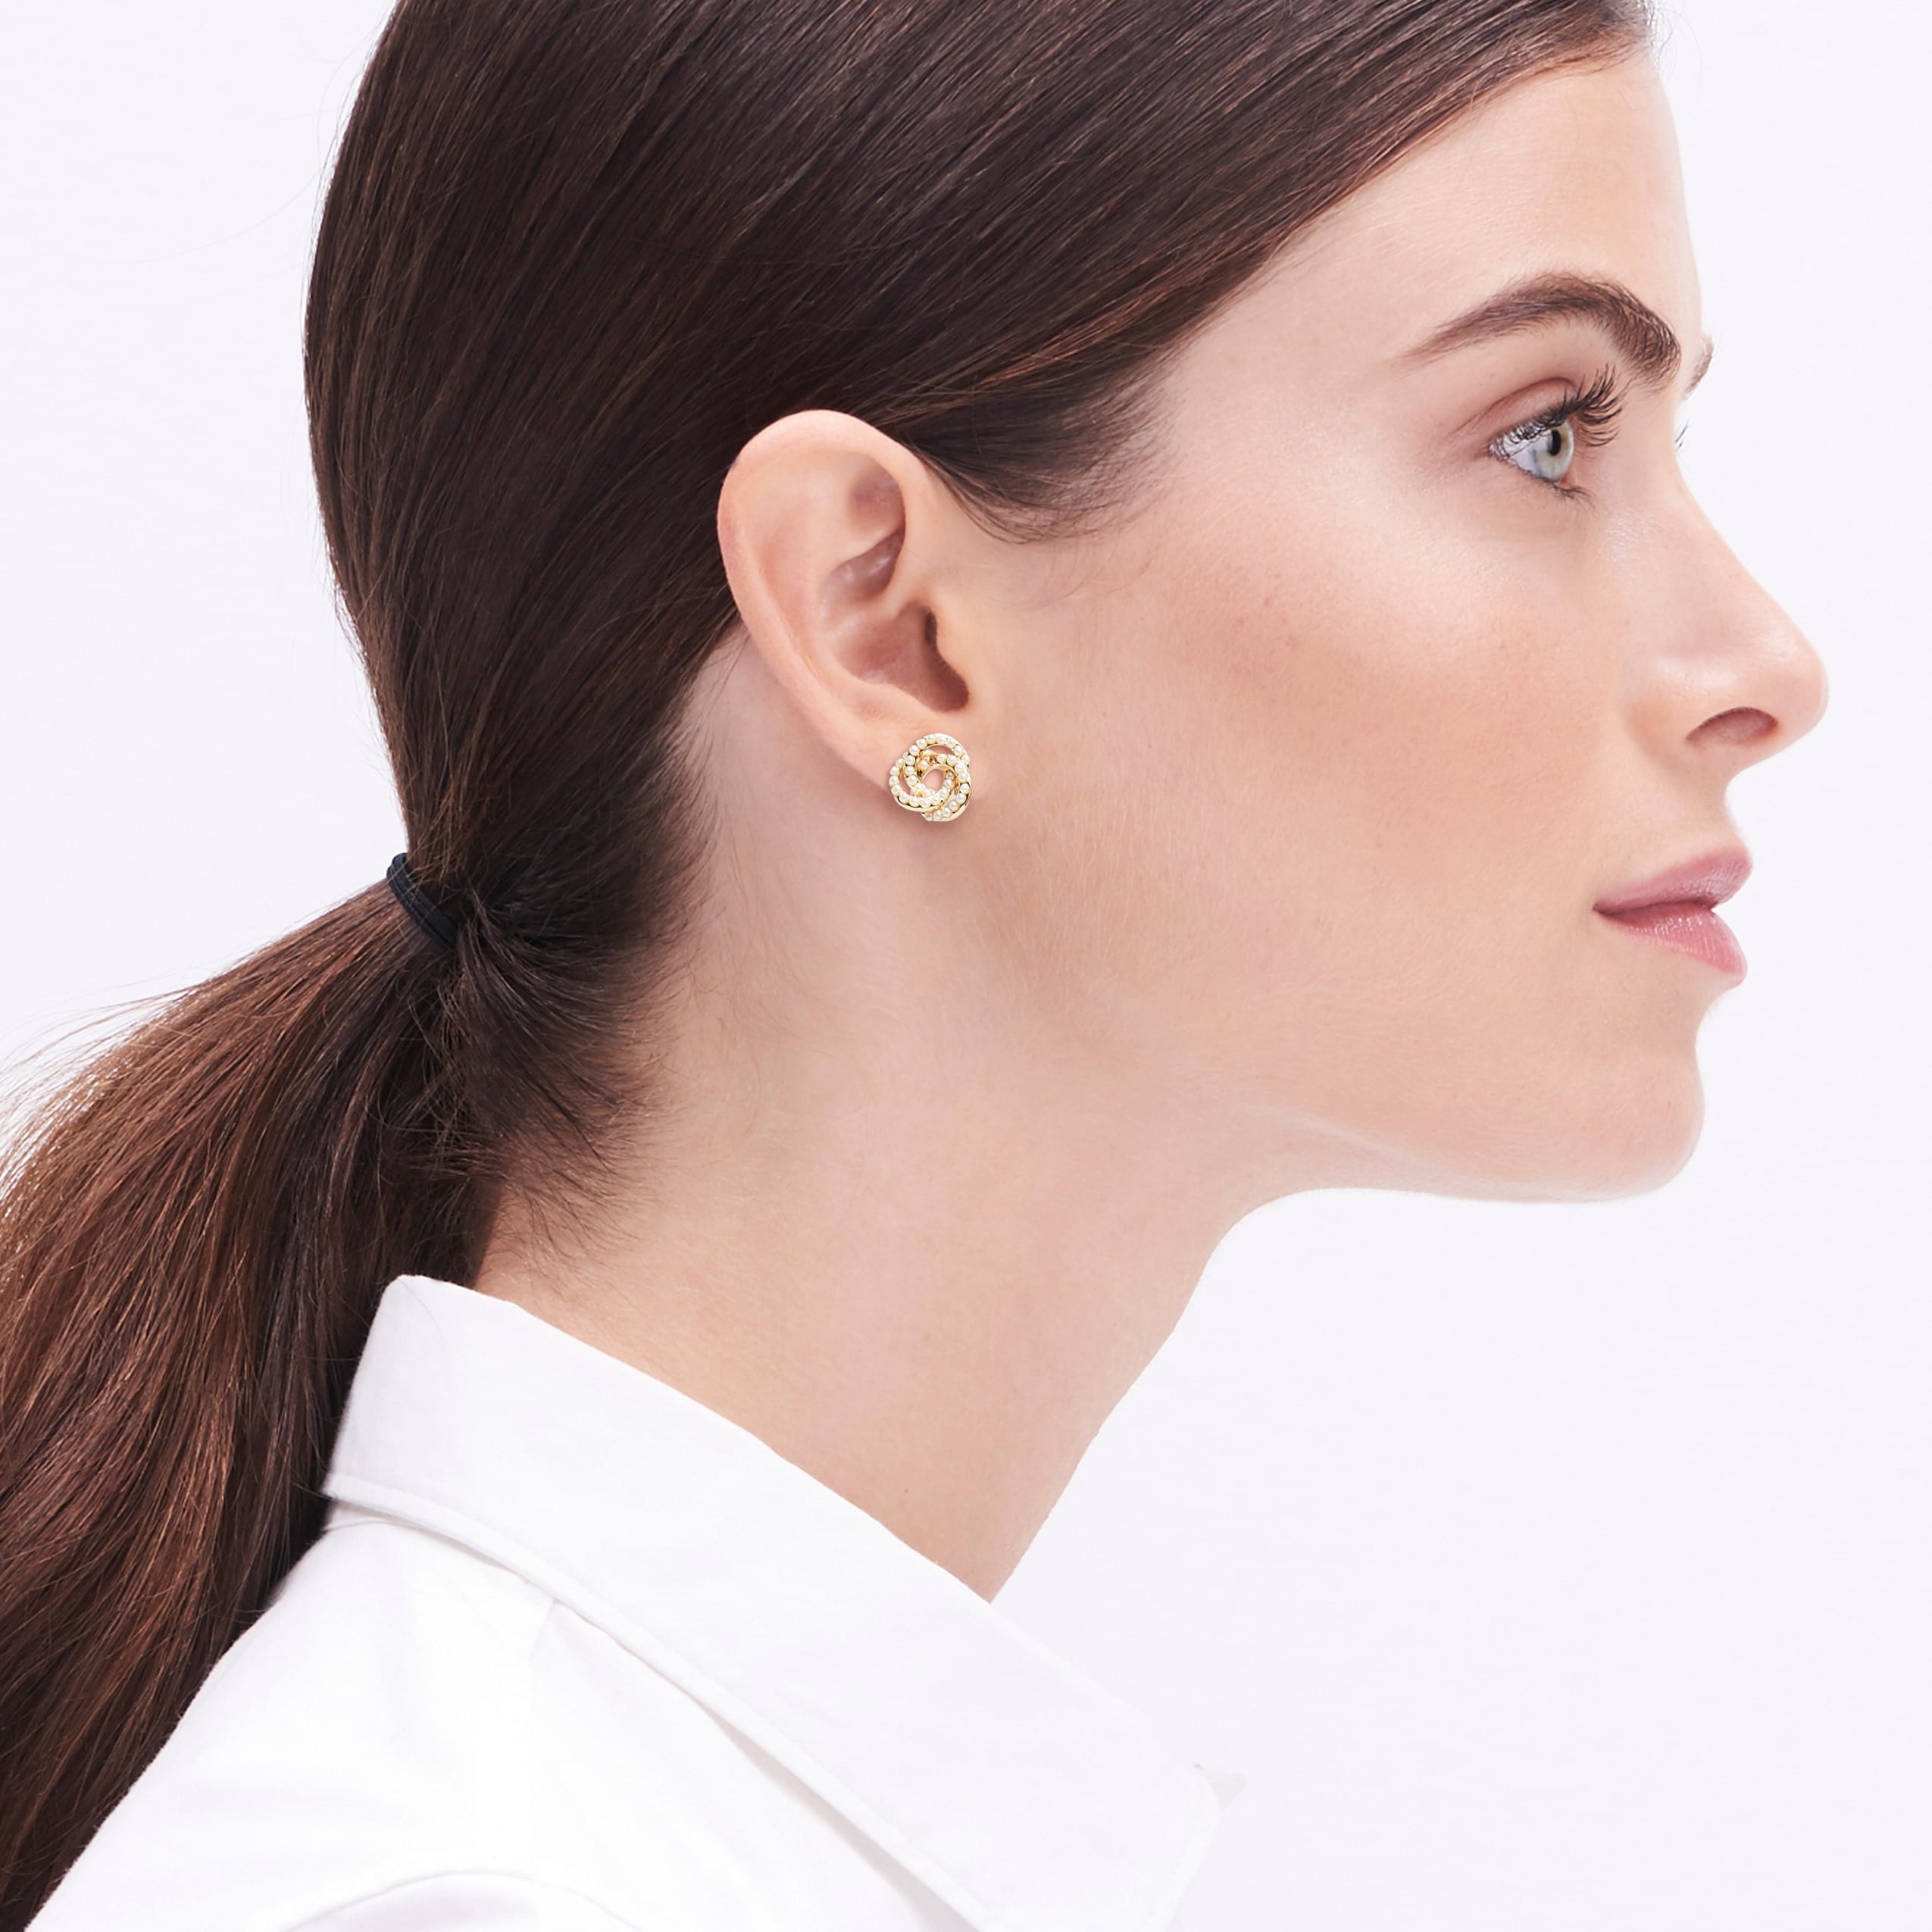 Pearl knot stud earrings